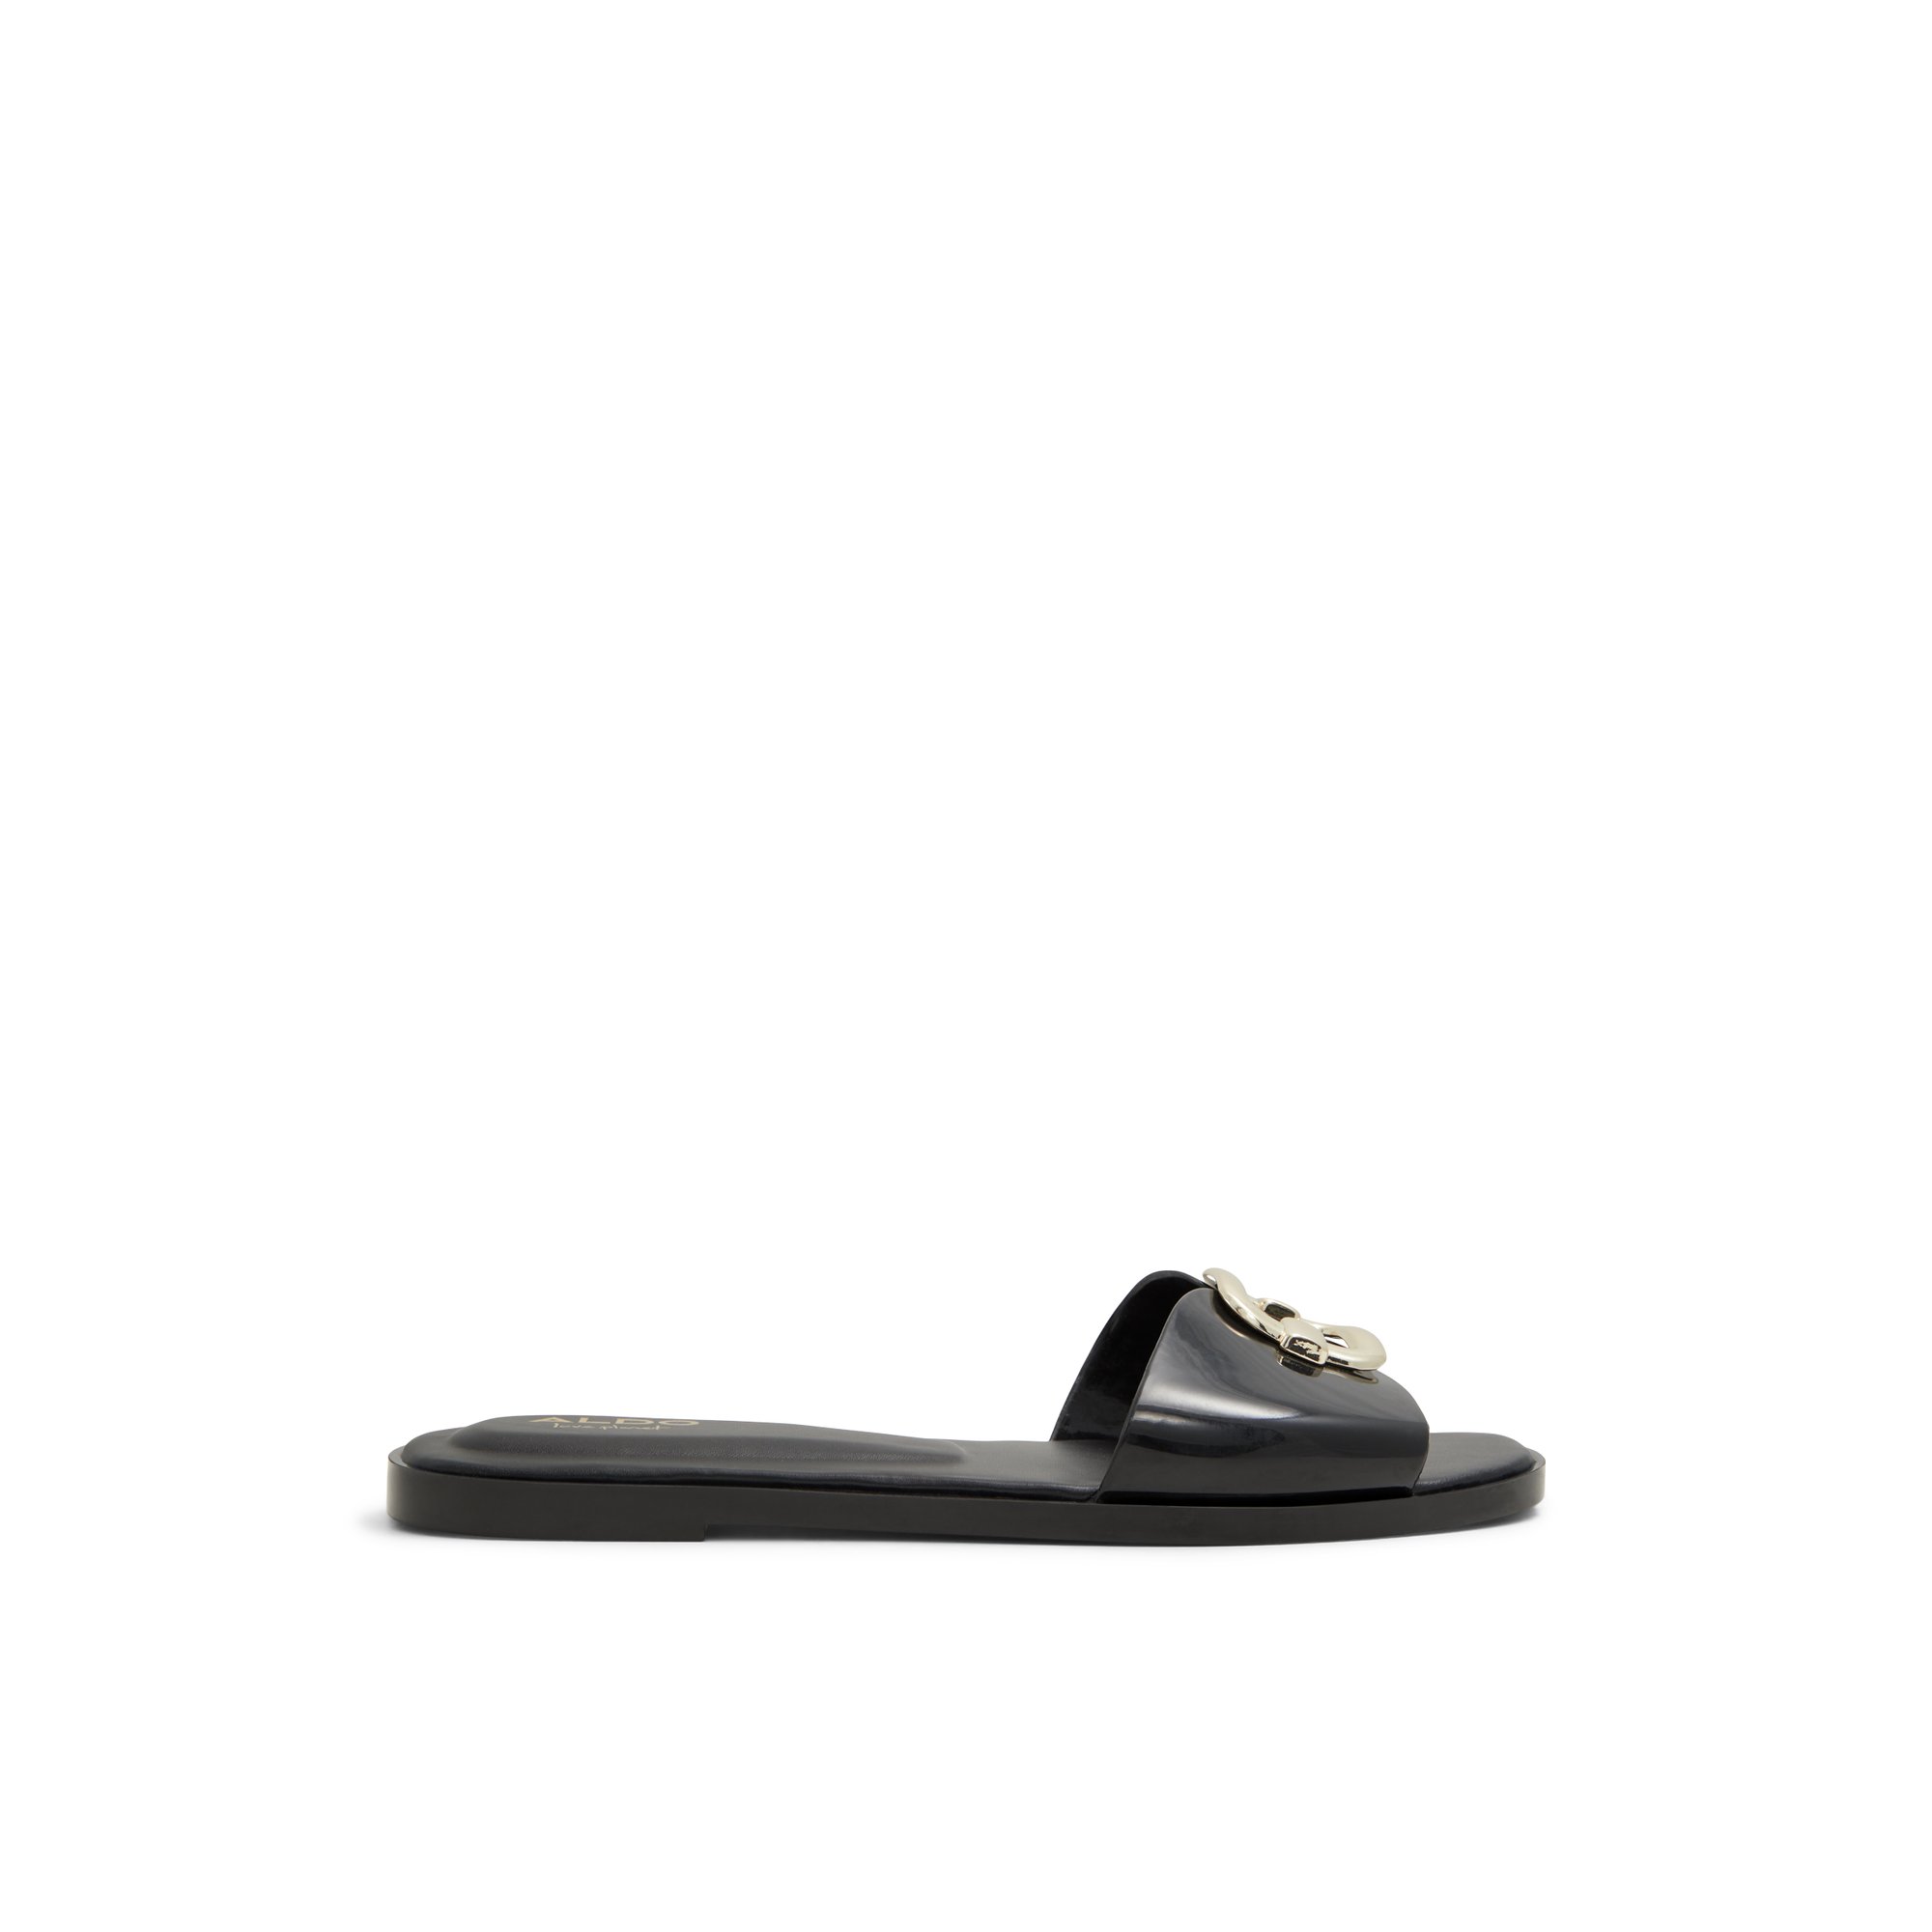 ALDO Jellyicious - Women's Flat Sandals - Black